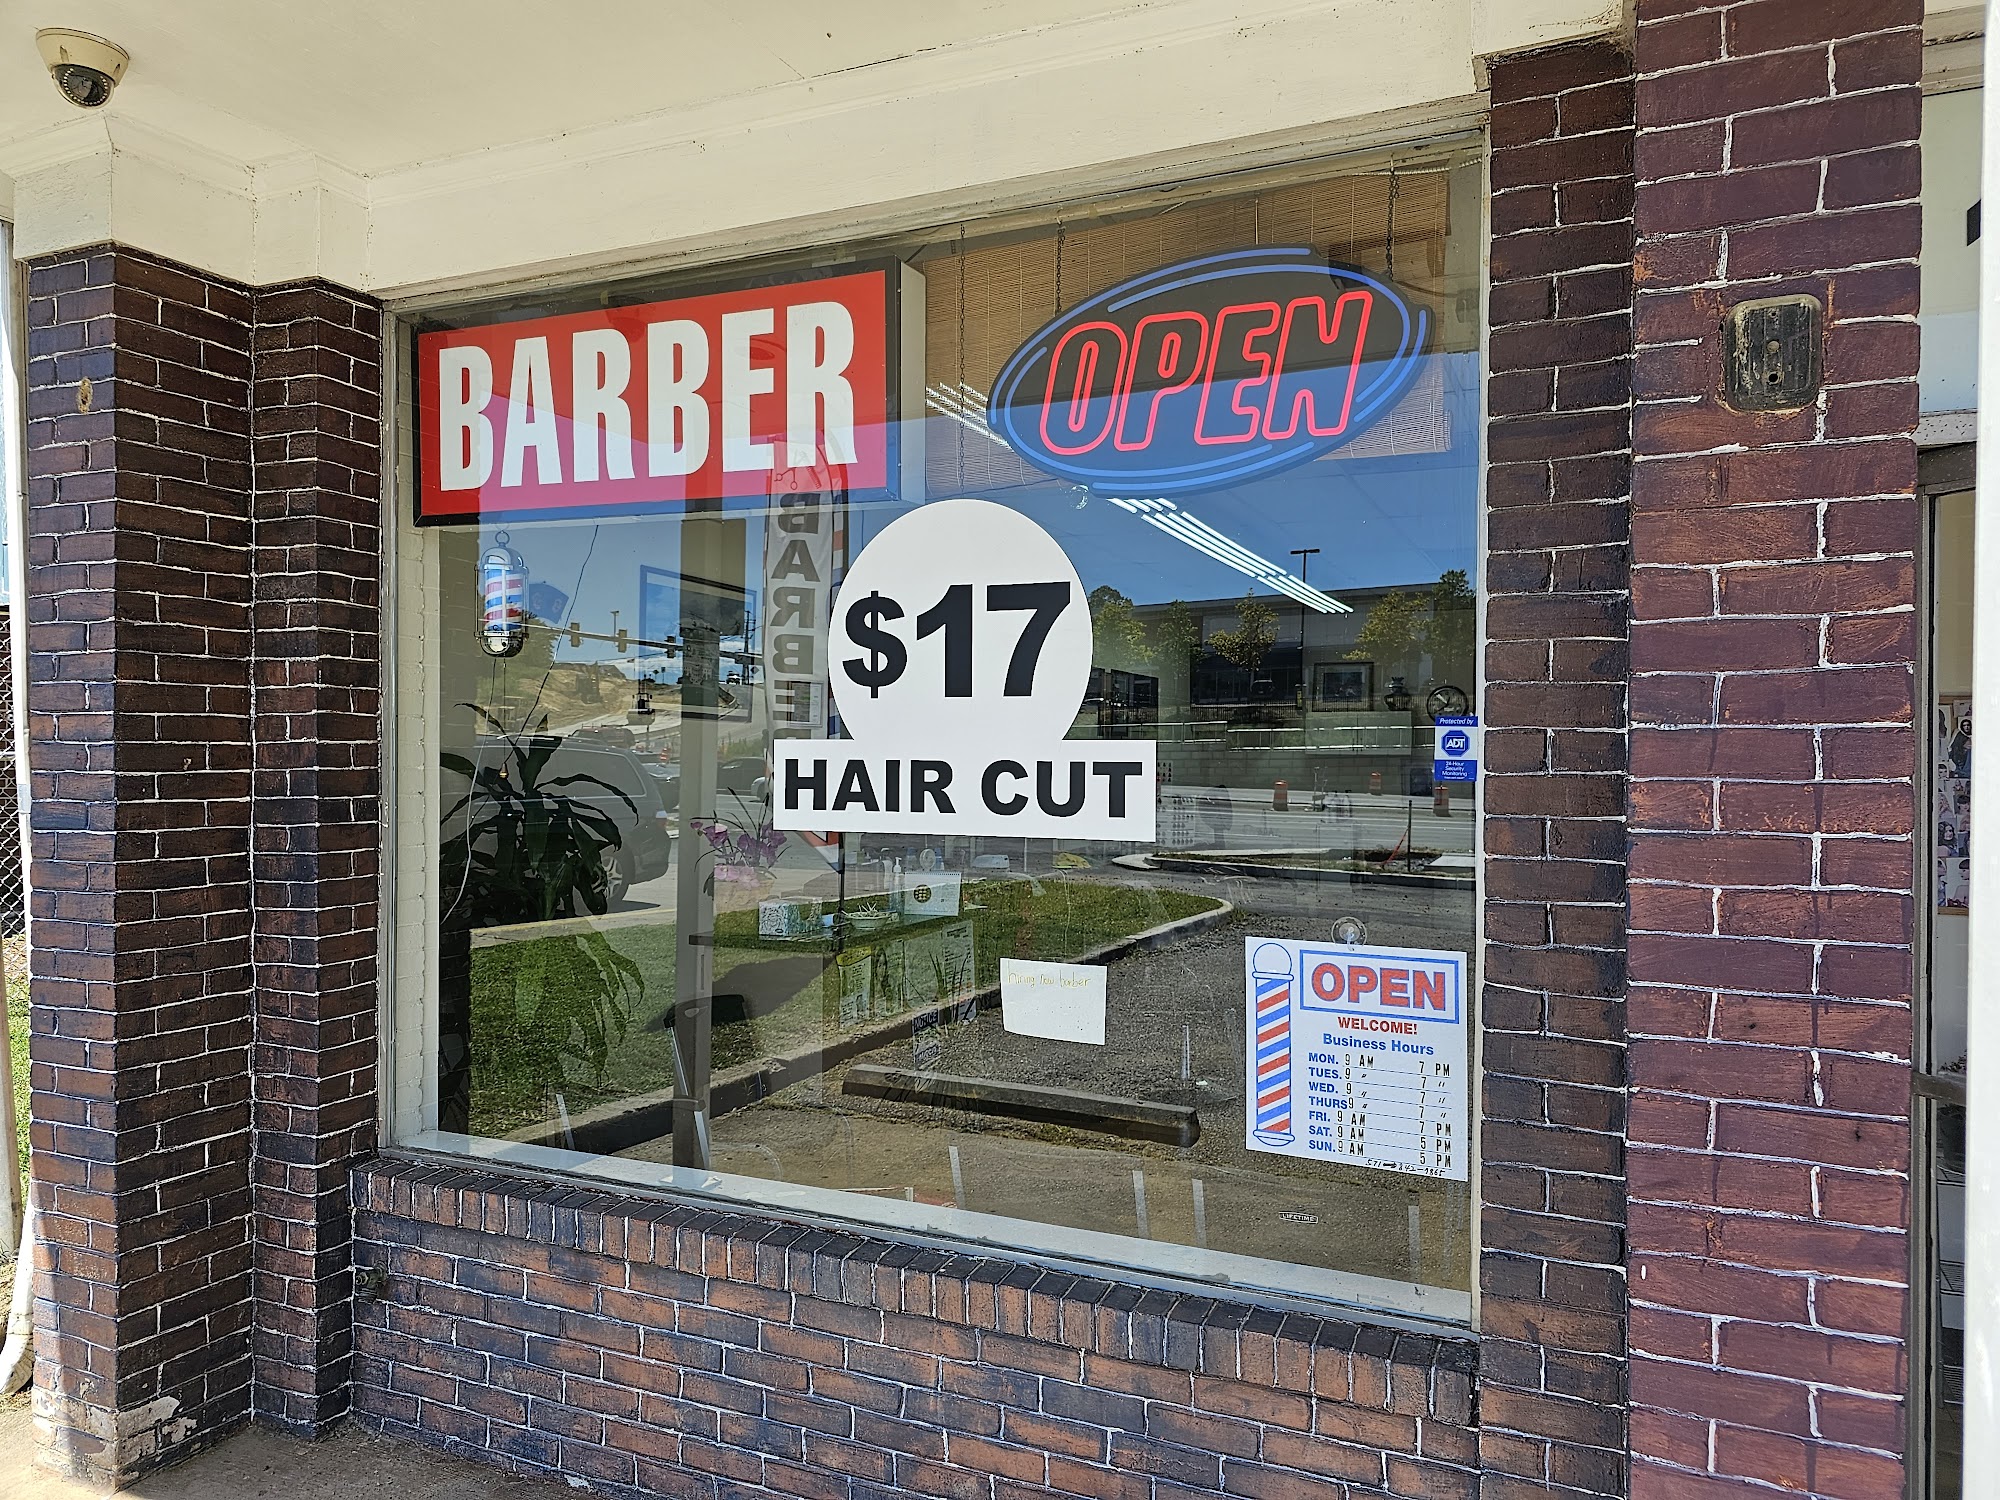 Star Barber and Salon